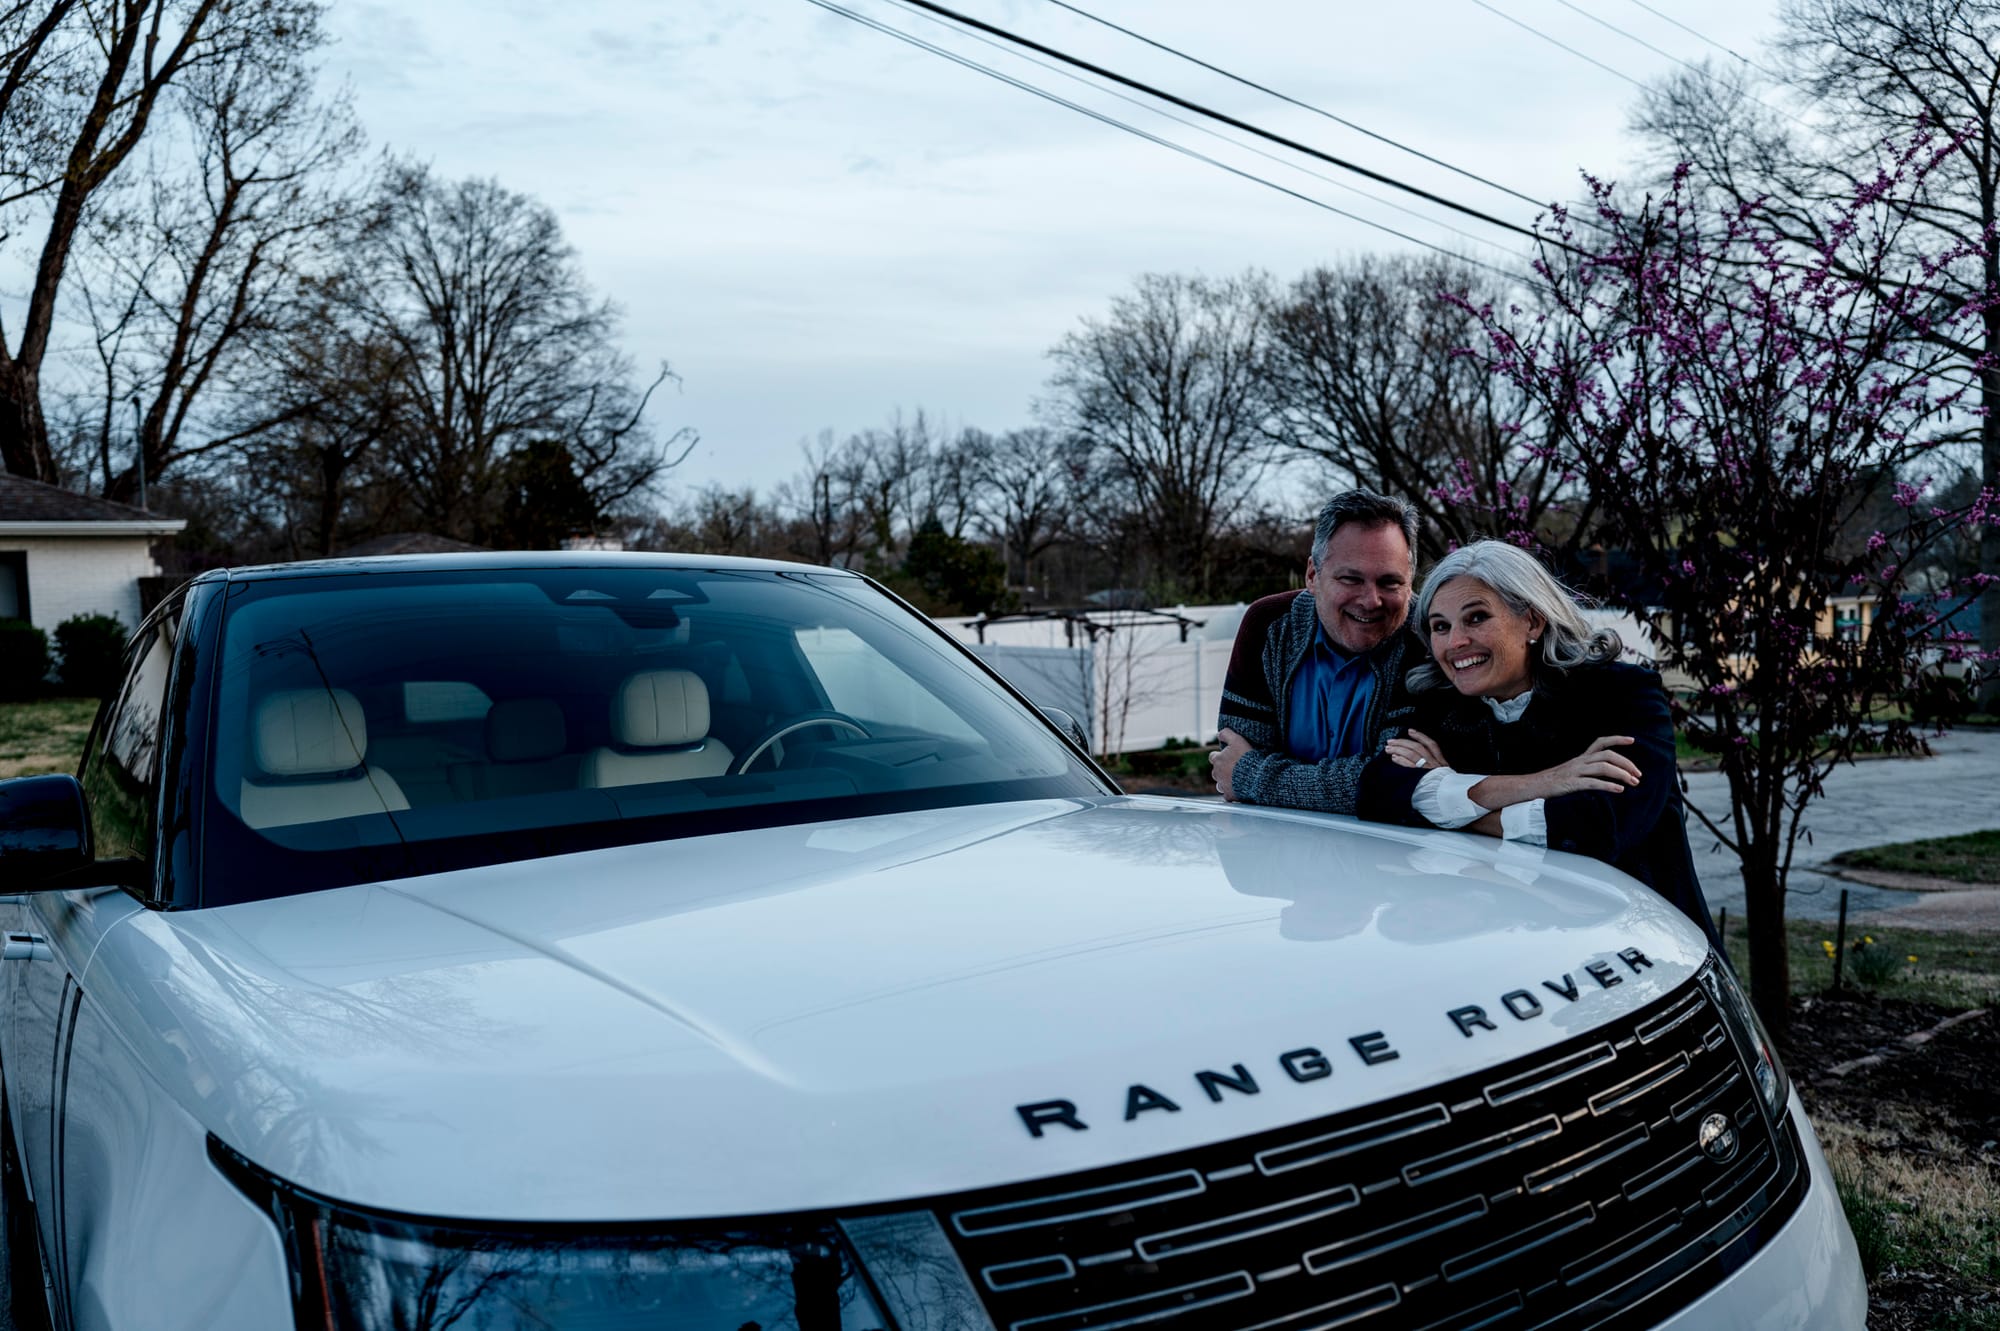 We Finally Get a Range Rover